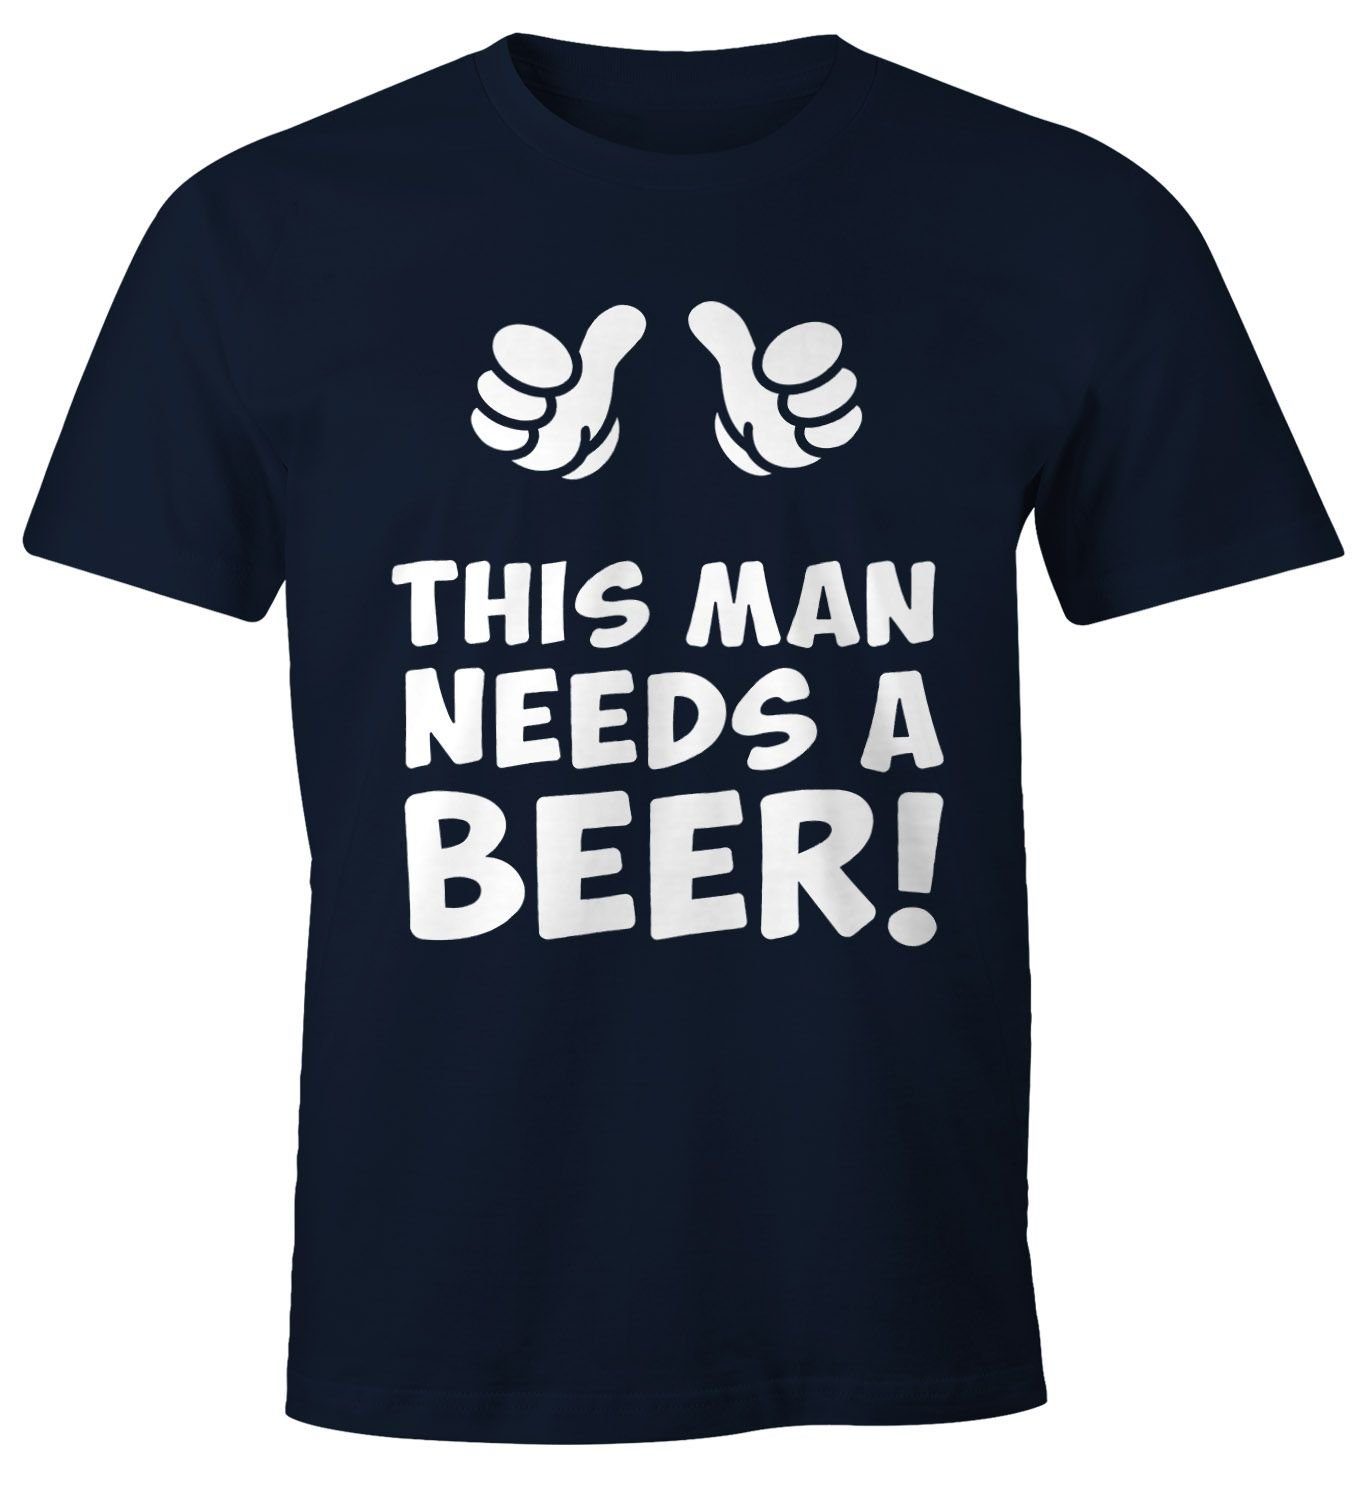 Print-Shirt Bier Herren T-Shirt man Moonworks® mit MoonWorks needs Print a This navy beer